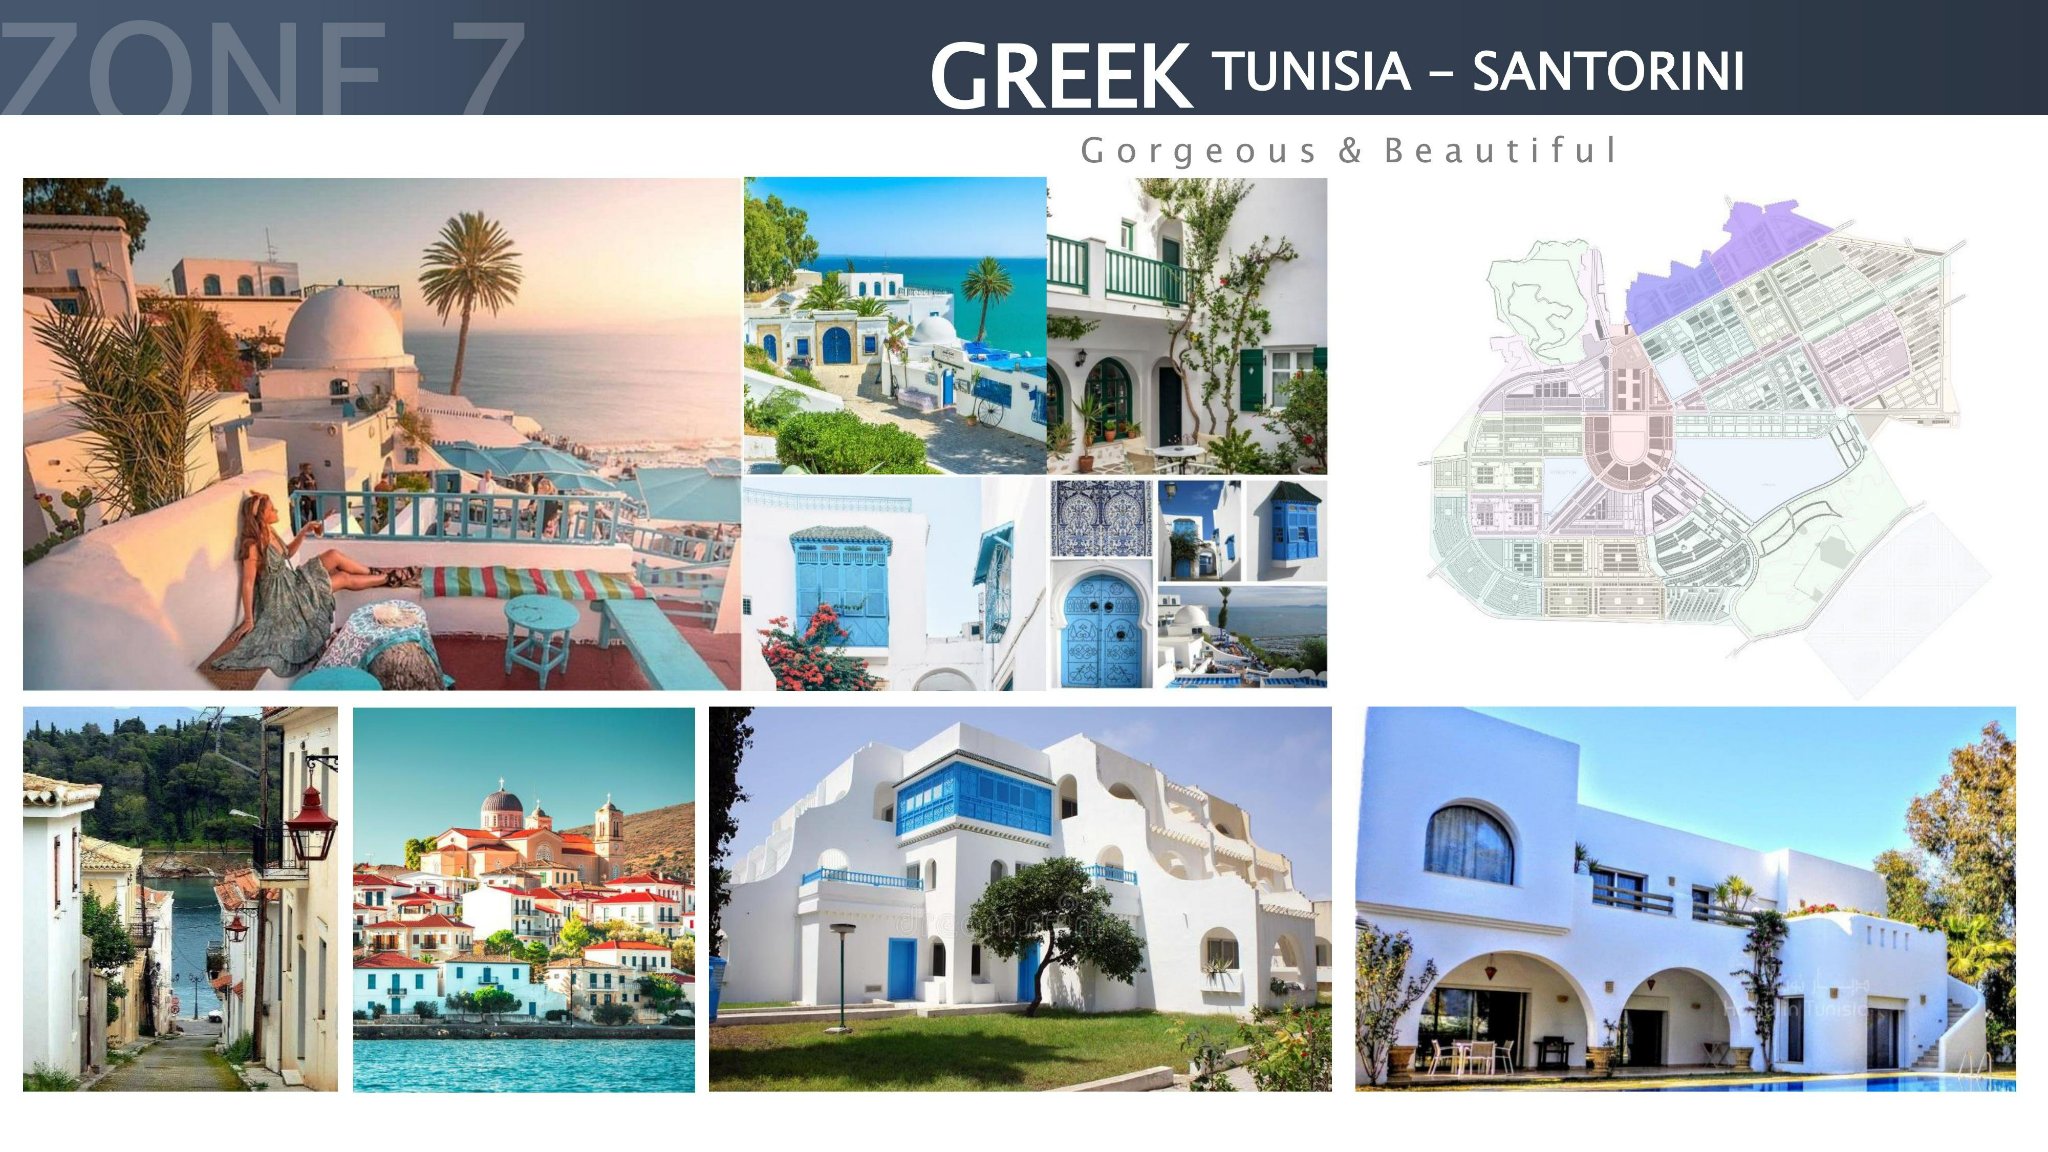 KIẾN TRÚC GREEK (TUNISIA - SANTORINE) MARINA CITY